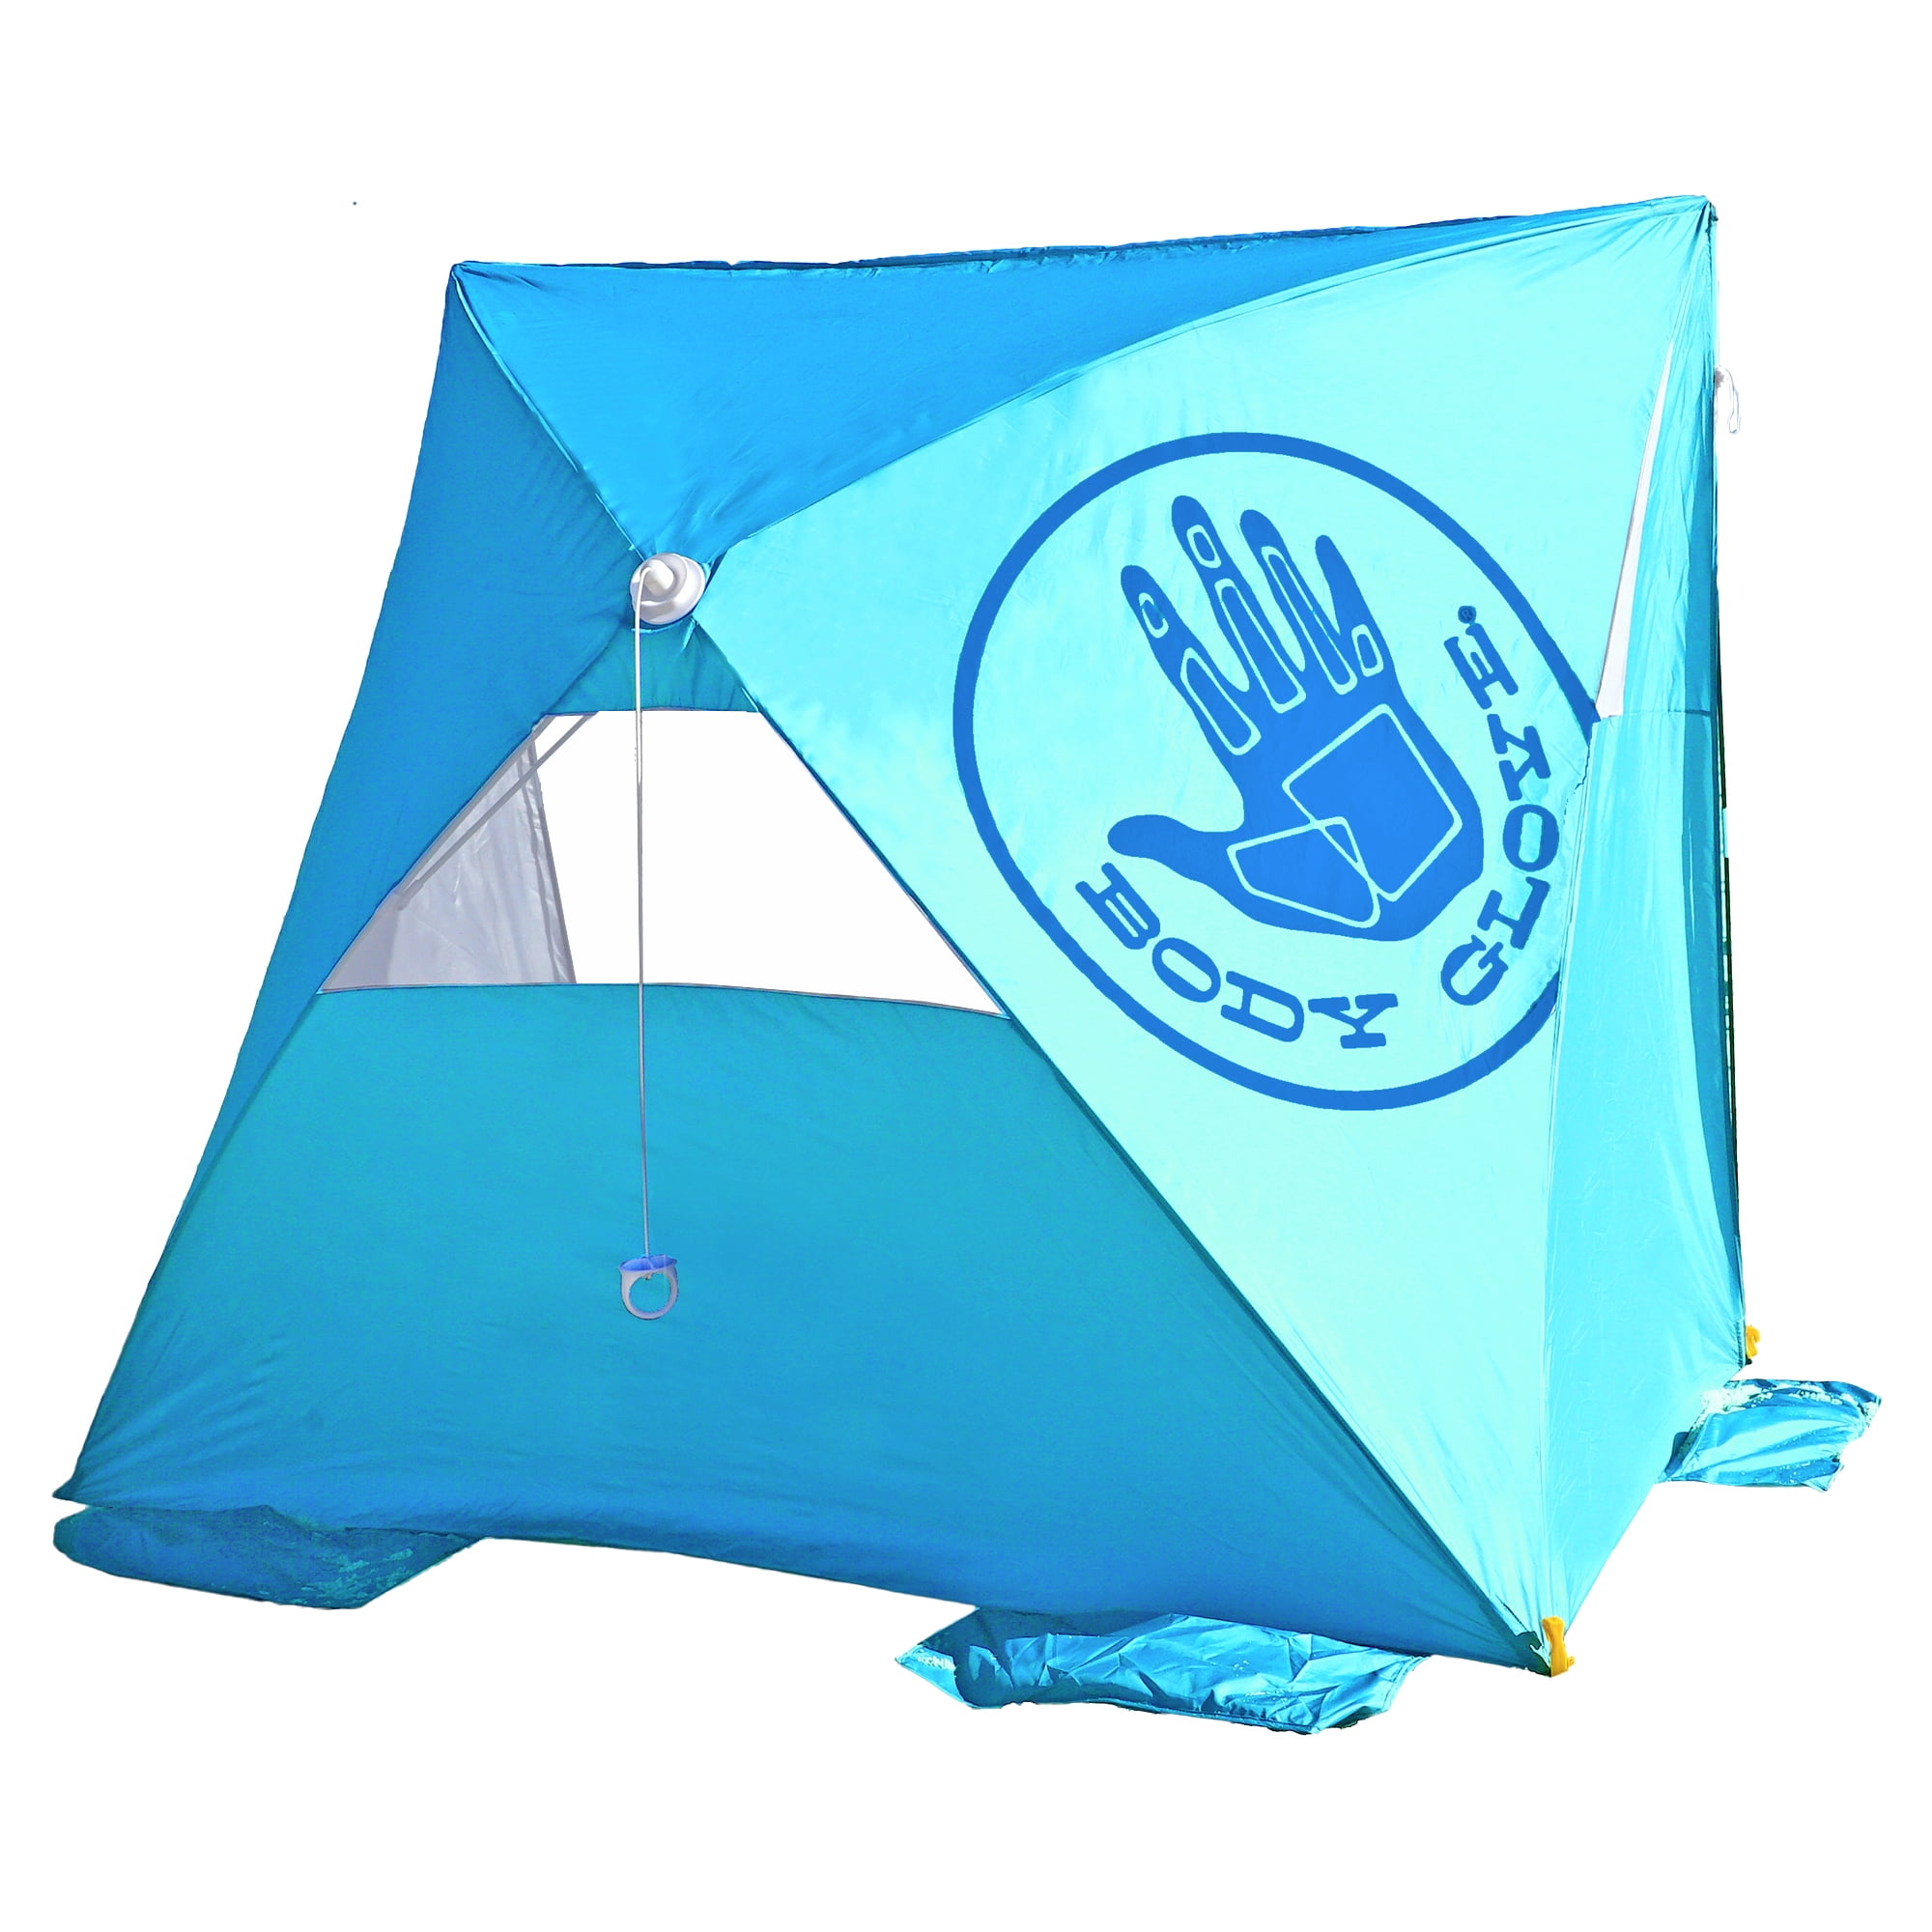 Body Glove 70.87 x 61.42 Beach Tent